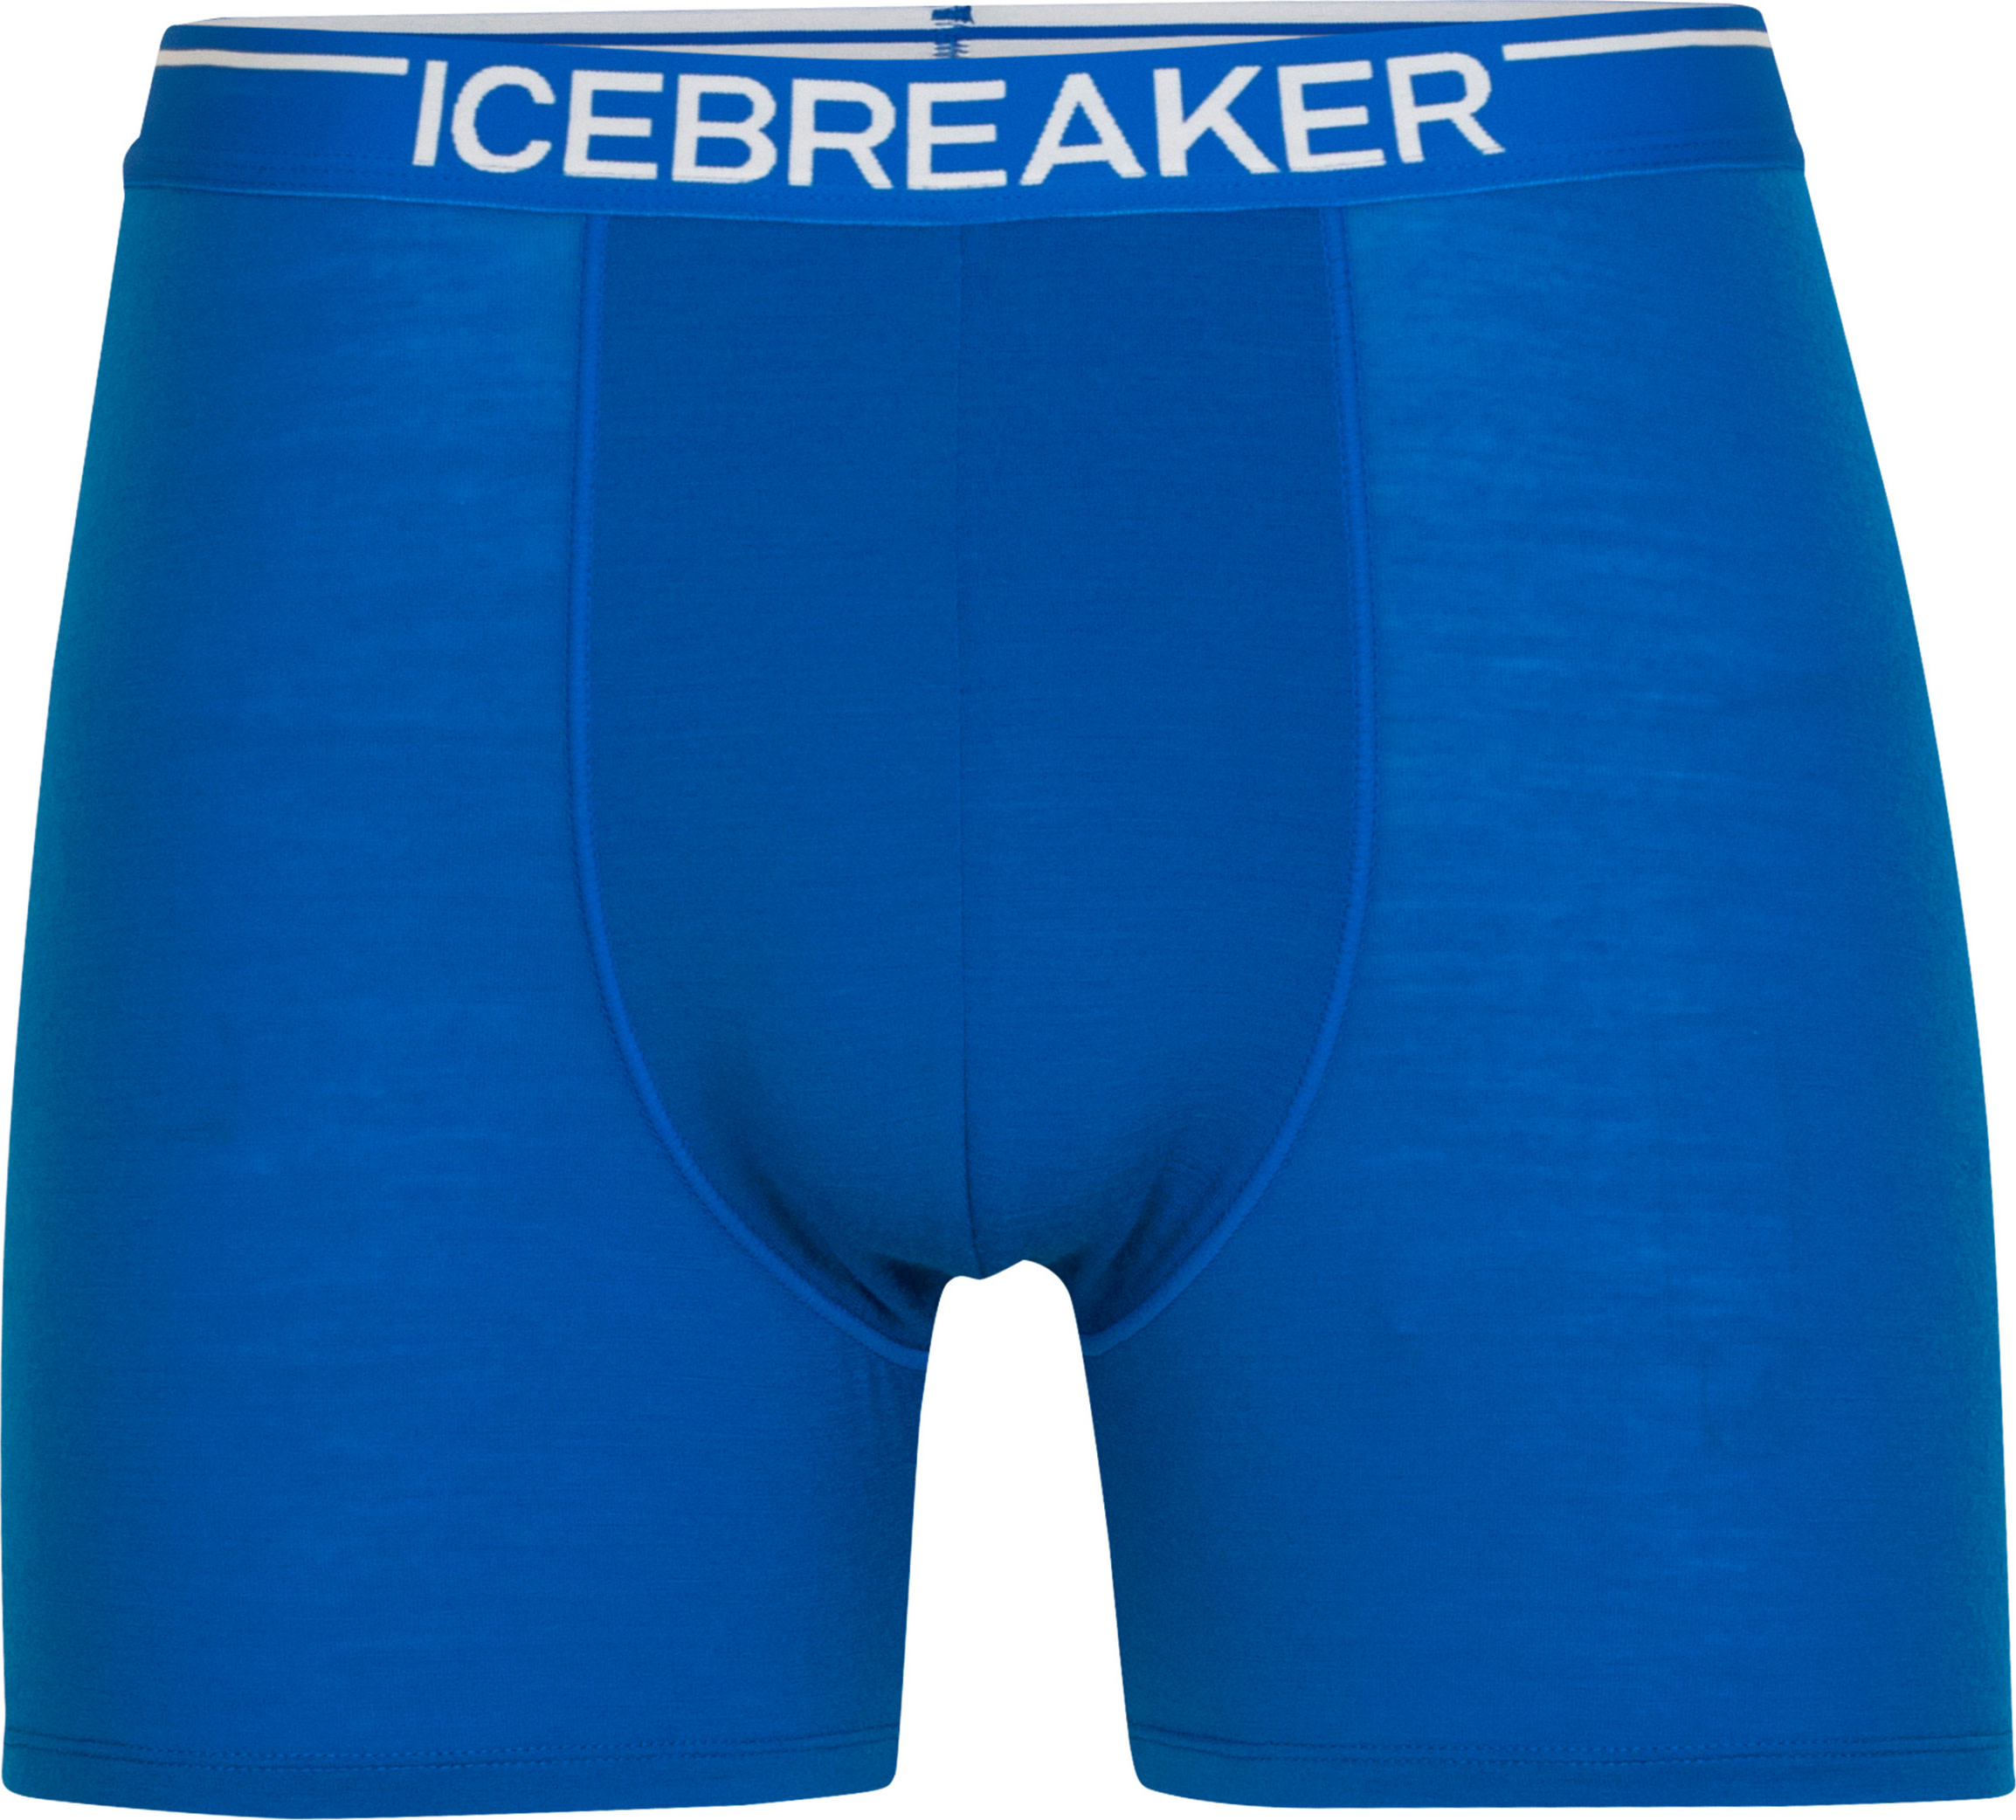 Icebreaker Men’s Anatomica Boxers LAZURITE